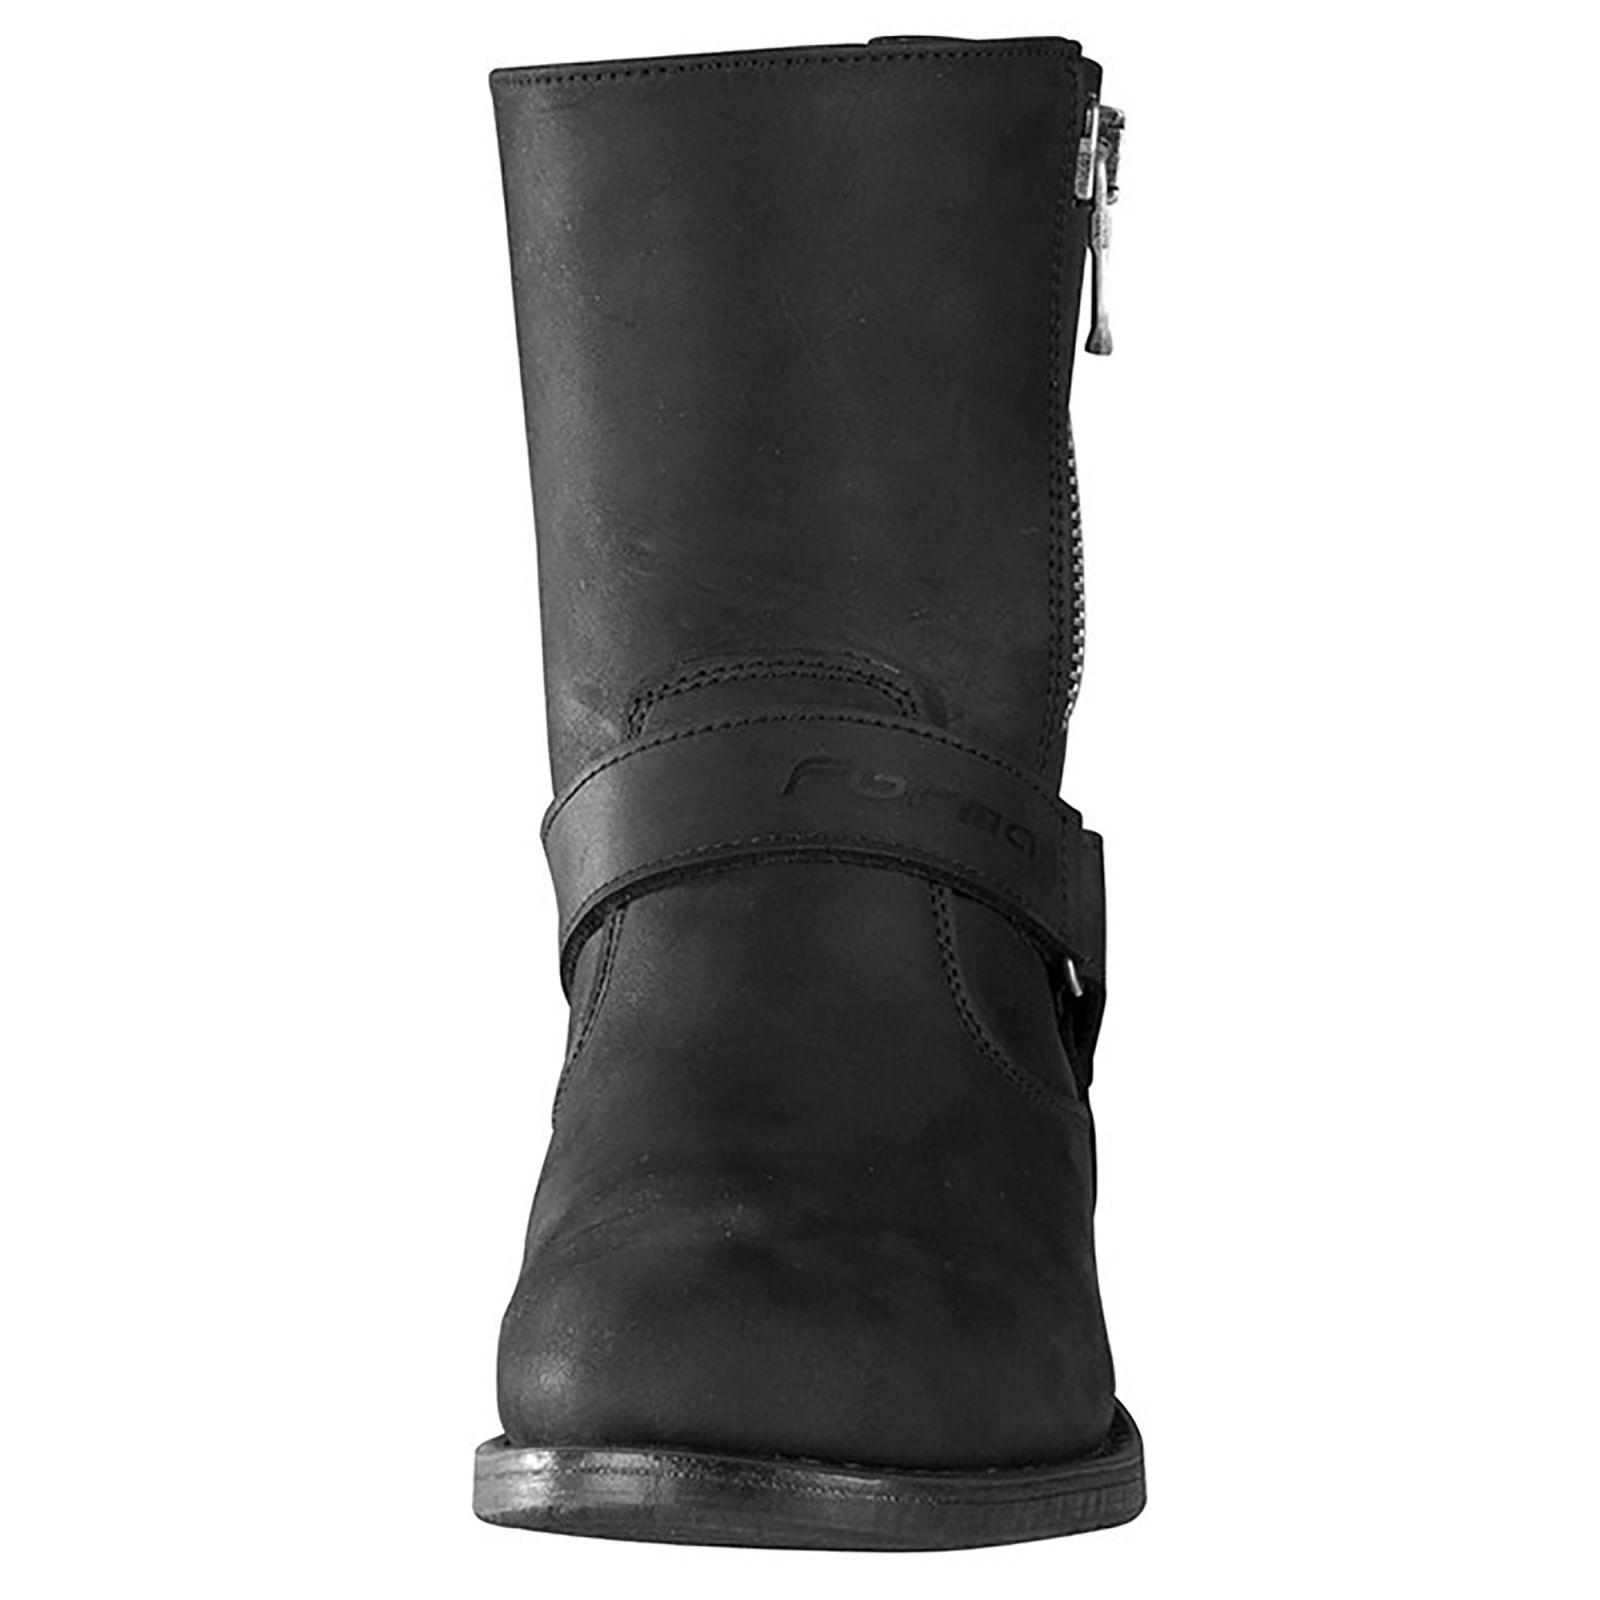 forma eva women's boots